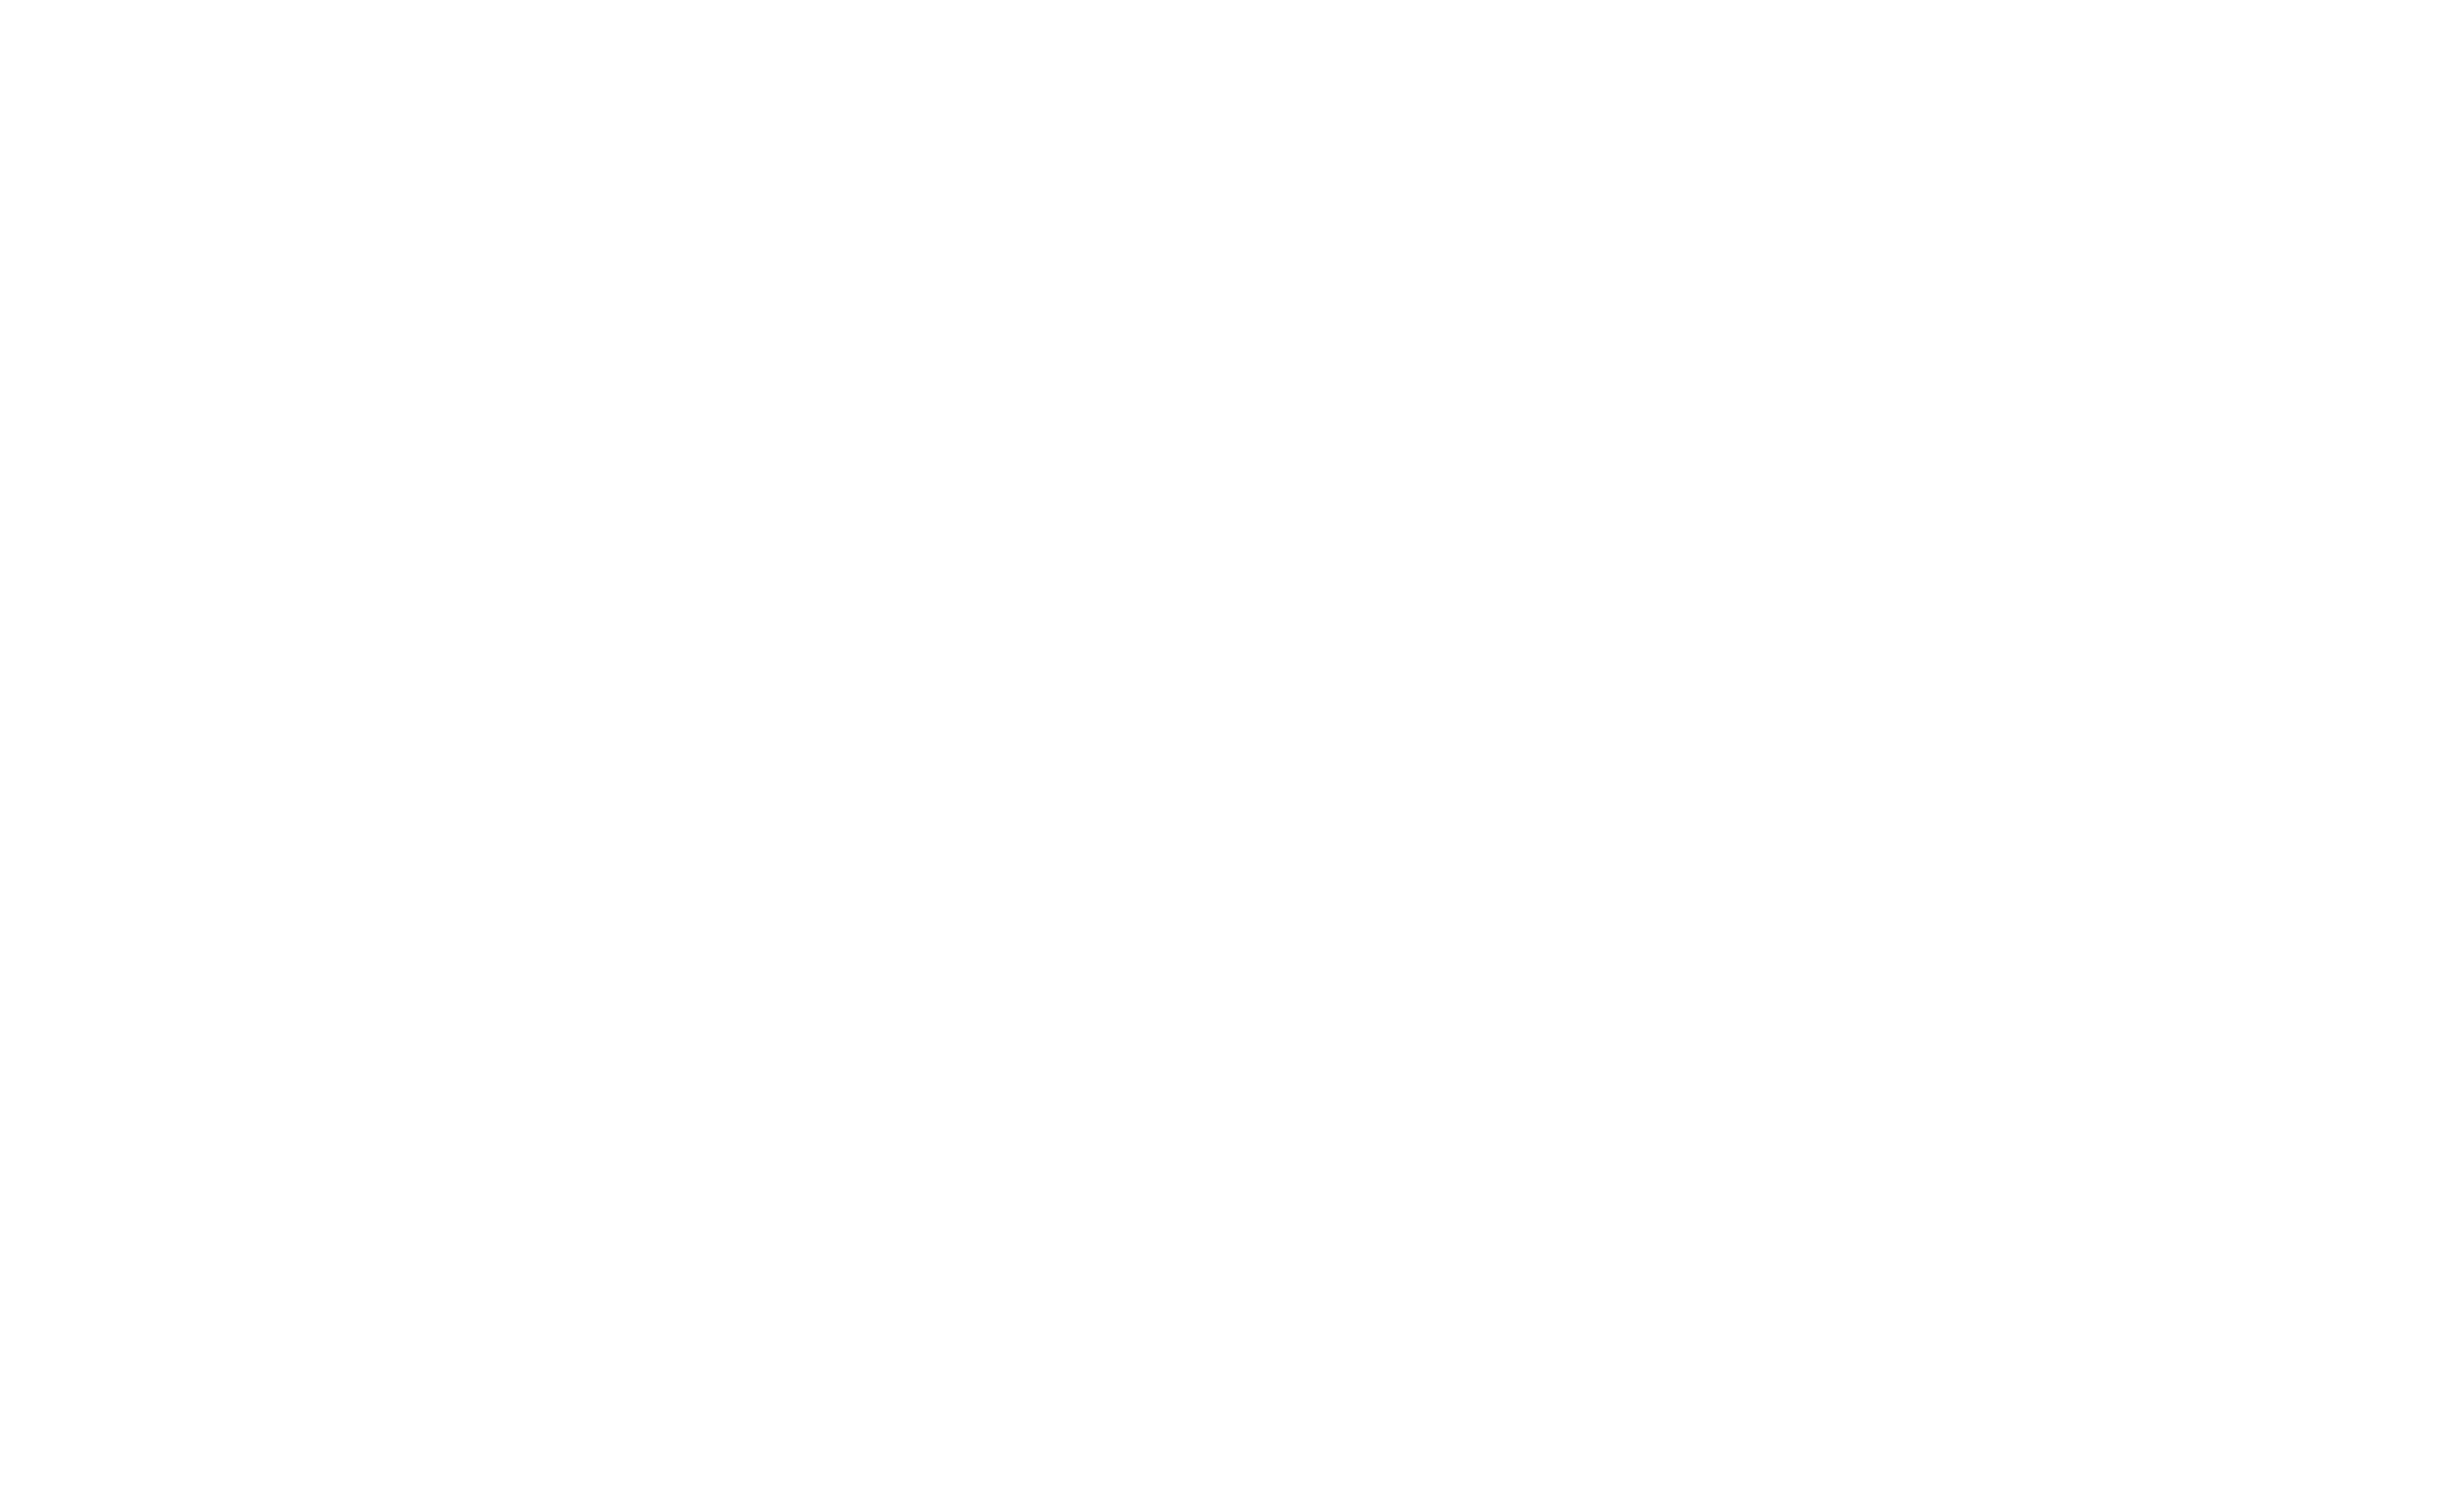 01_newyorkcity-branding-cover